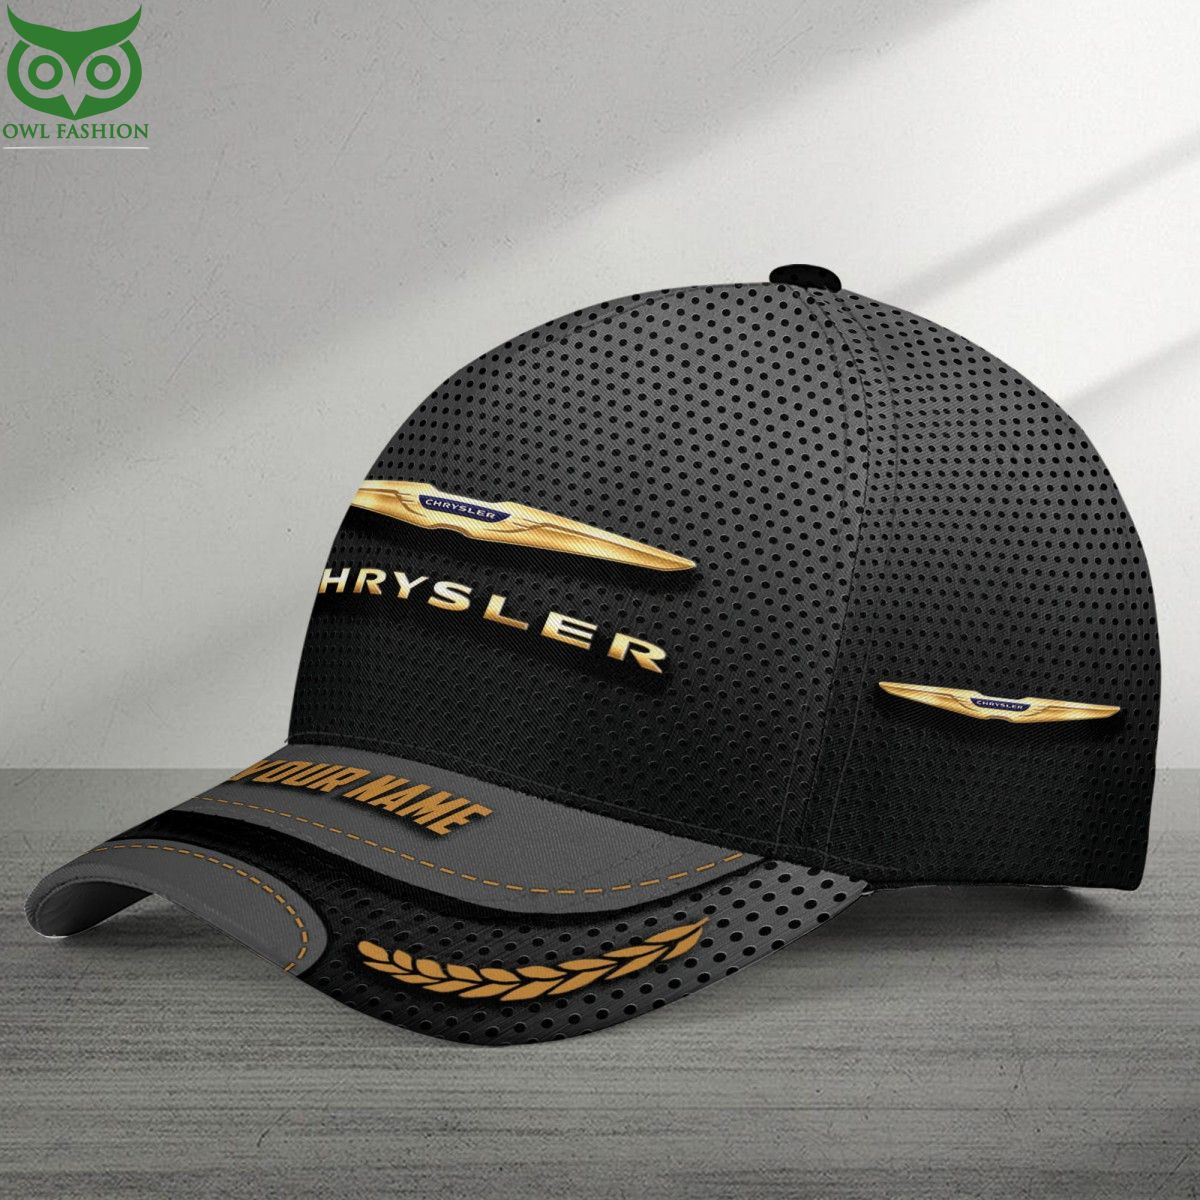 chrysler luxury logo brand personalized classic cap 4 w3kOX.jpg